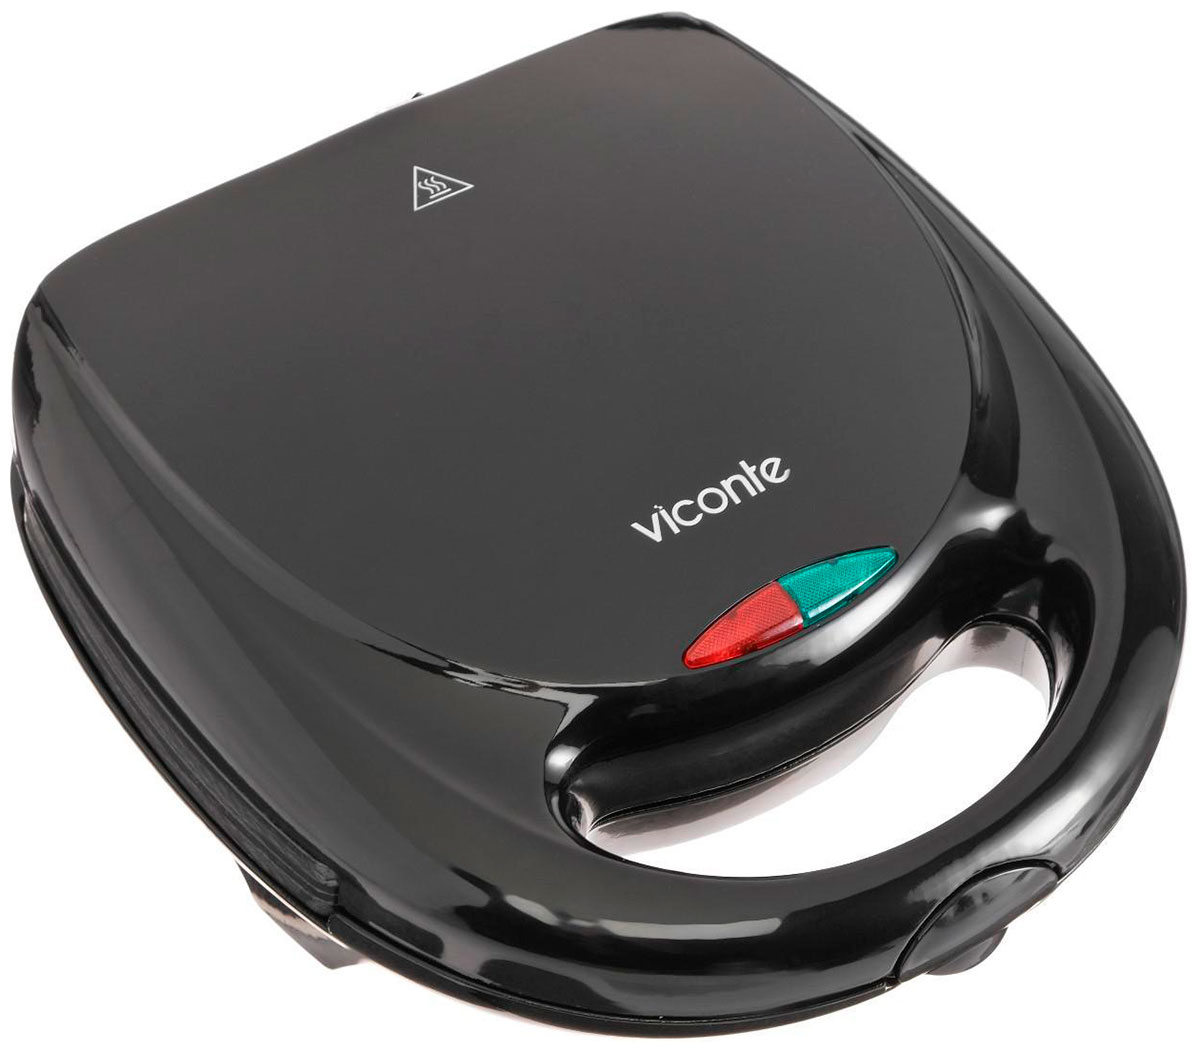 Орешница Viconte VC-161 черная прибор для выпечки viconte vc 161 чёрная